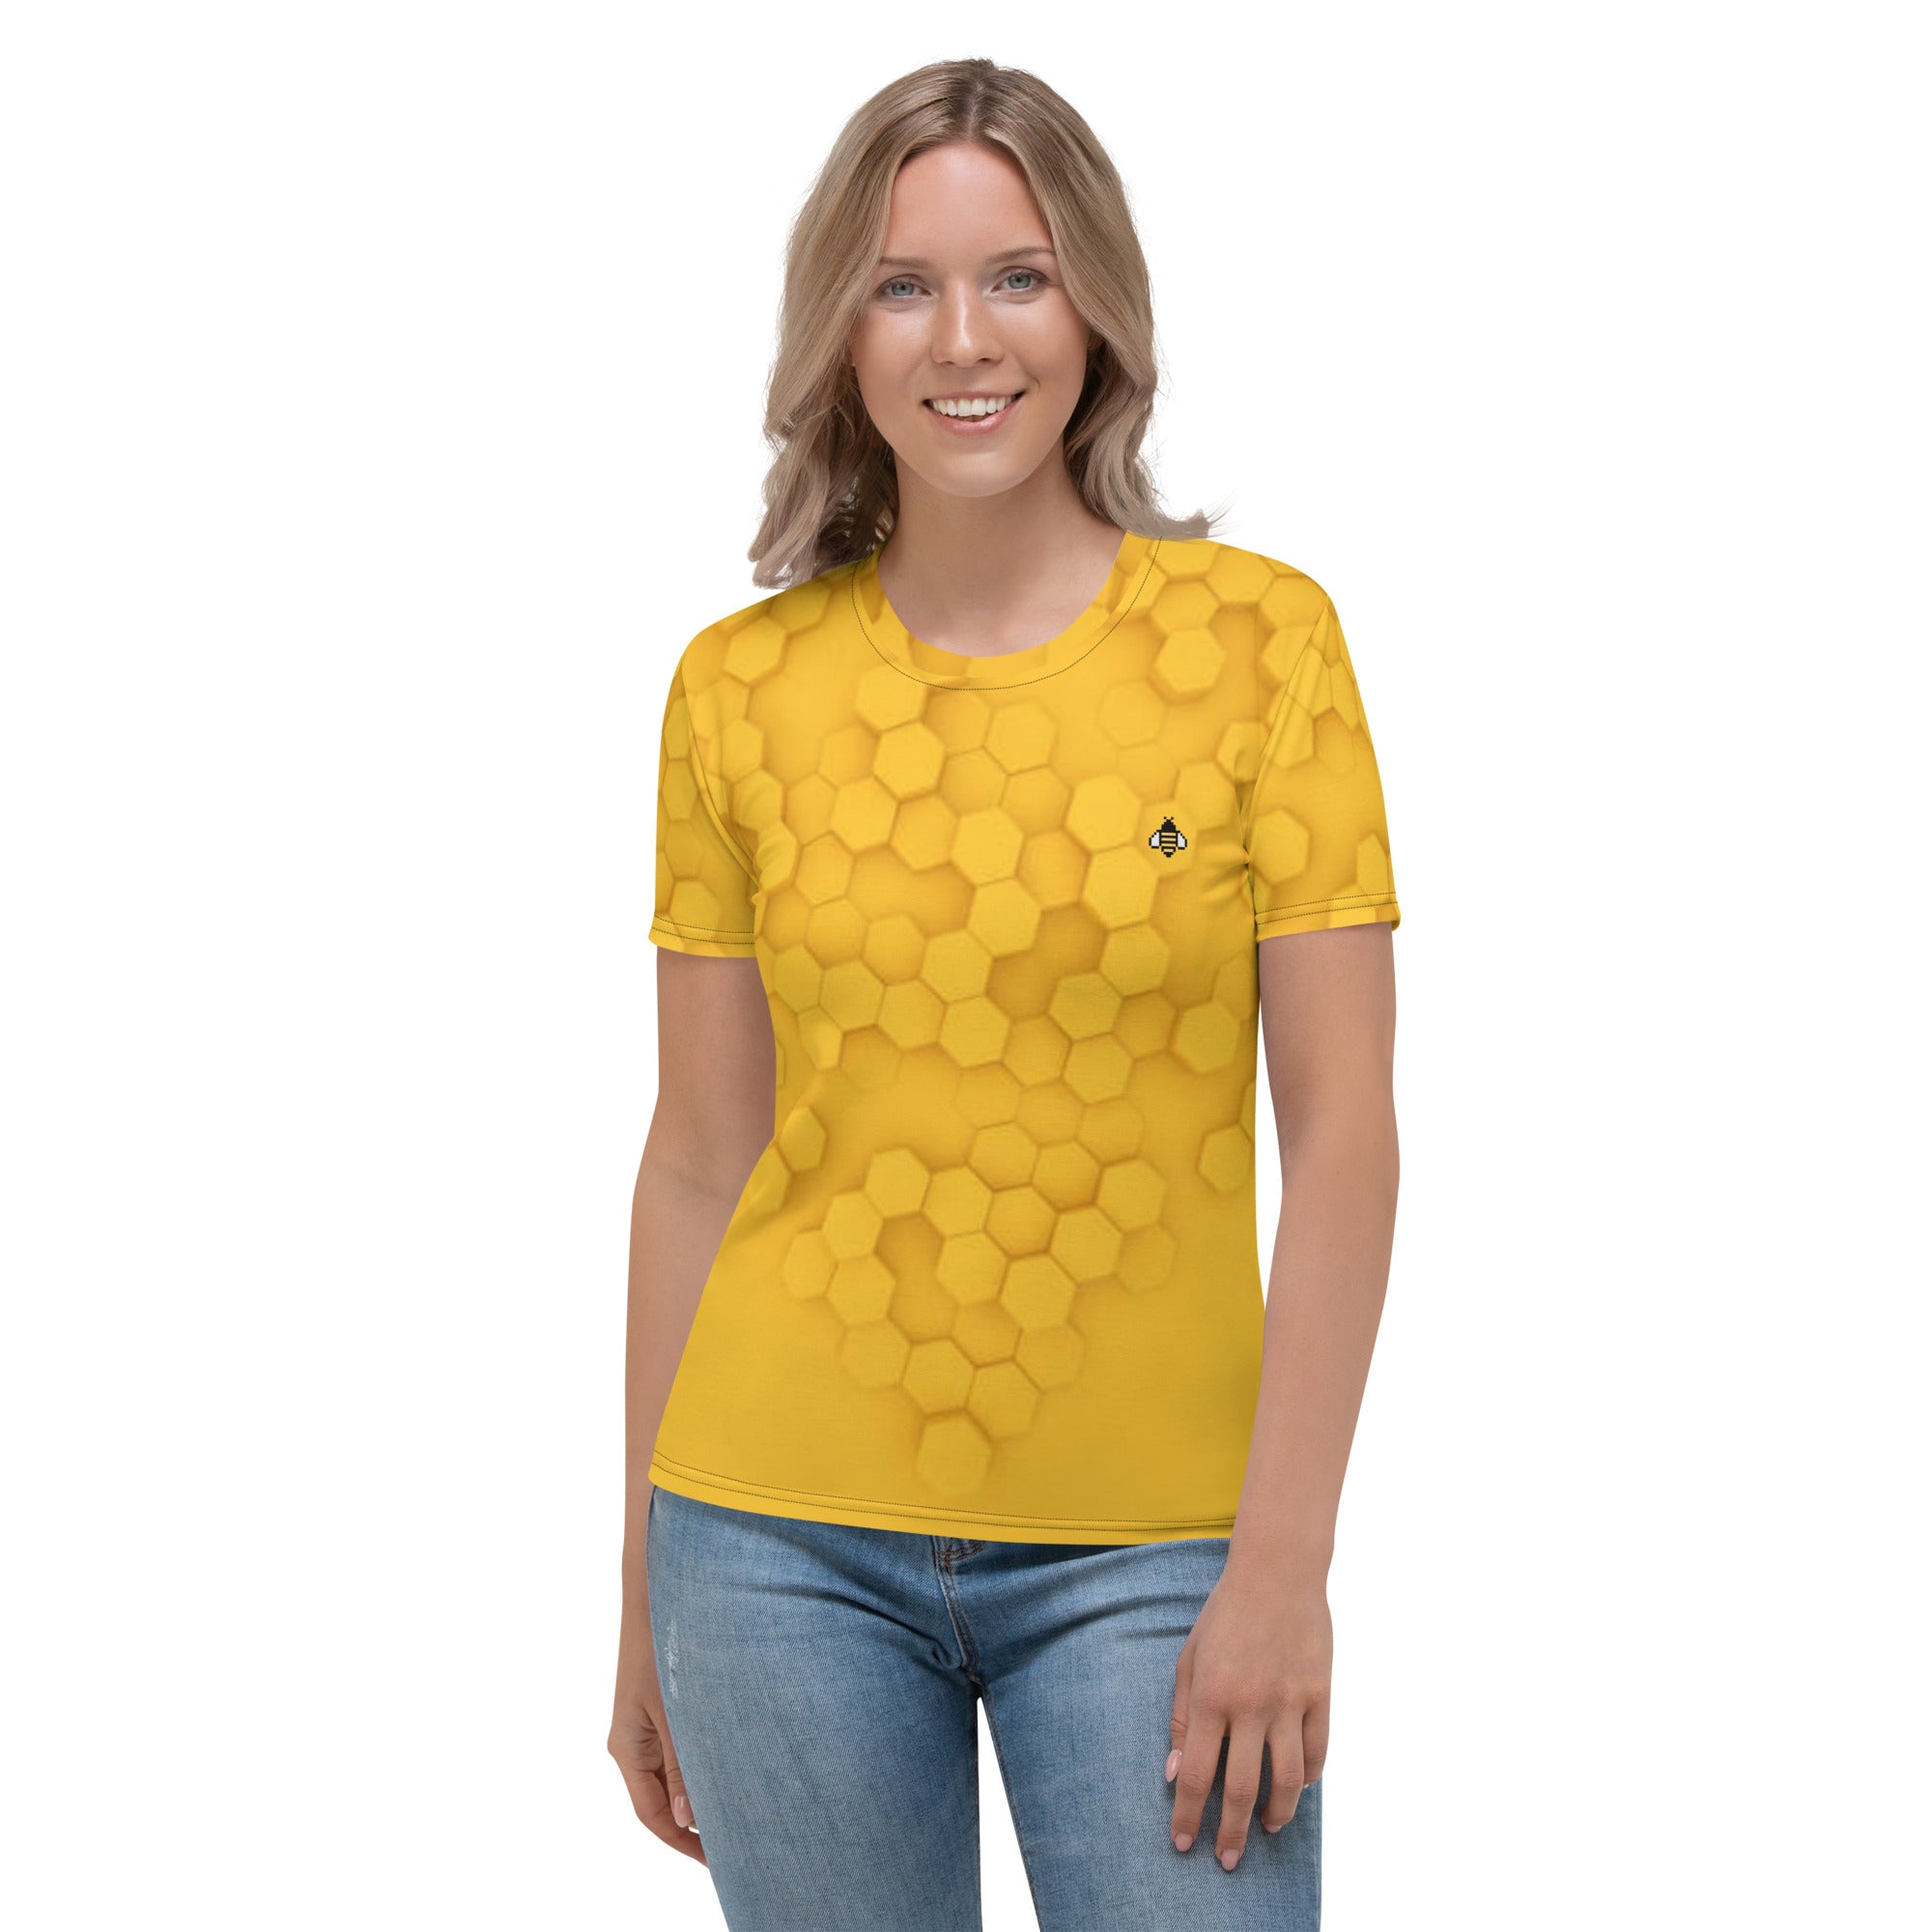 Honeycomb Women's TShirt - Front - https://ascensionemporium.net